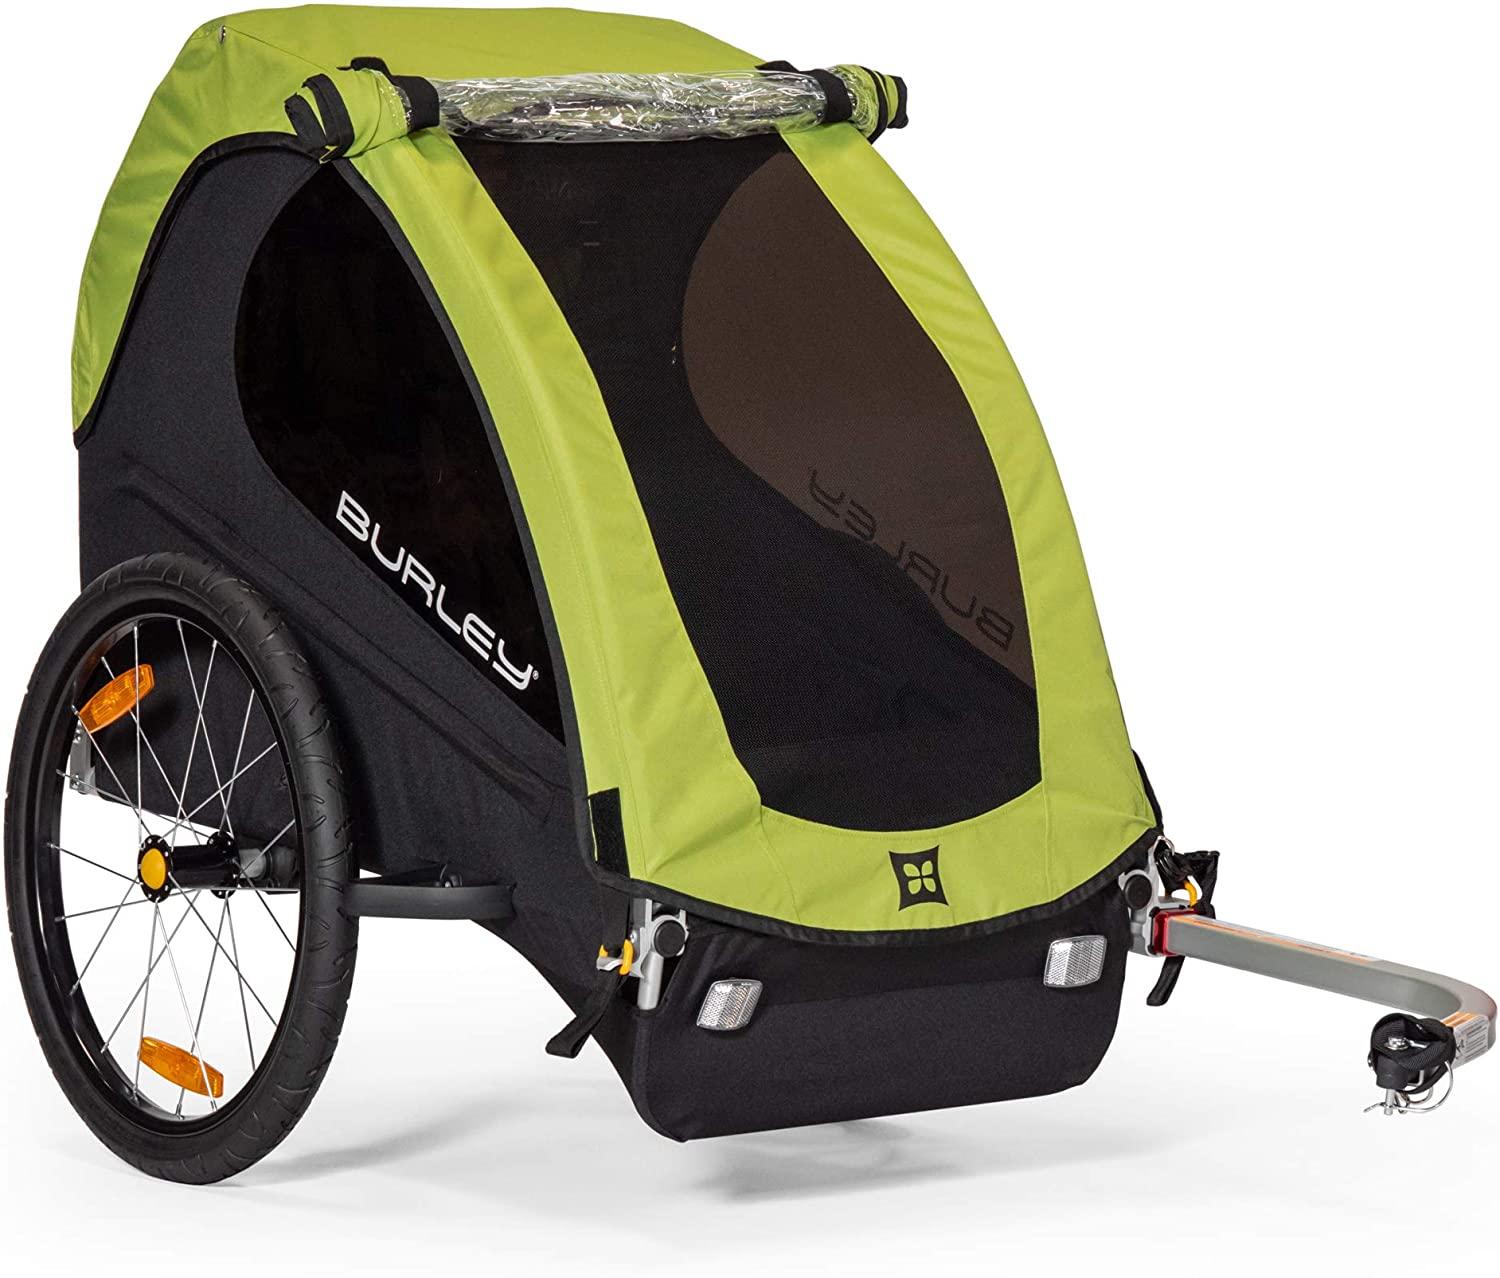 Burley Minnow 1-Seat Kids Bike Trailer for $223.98 Shipped